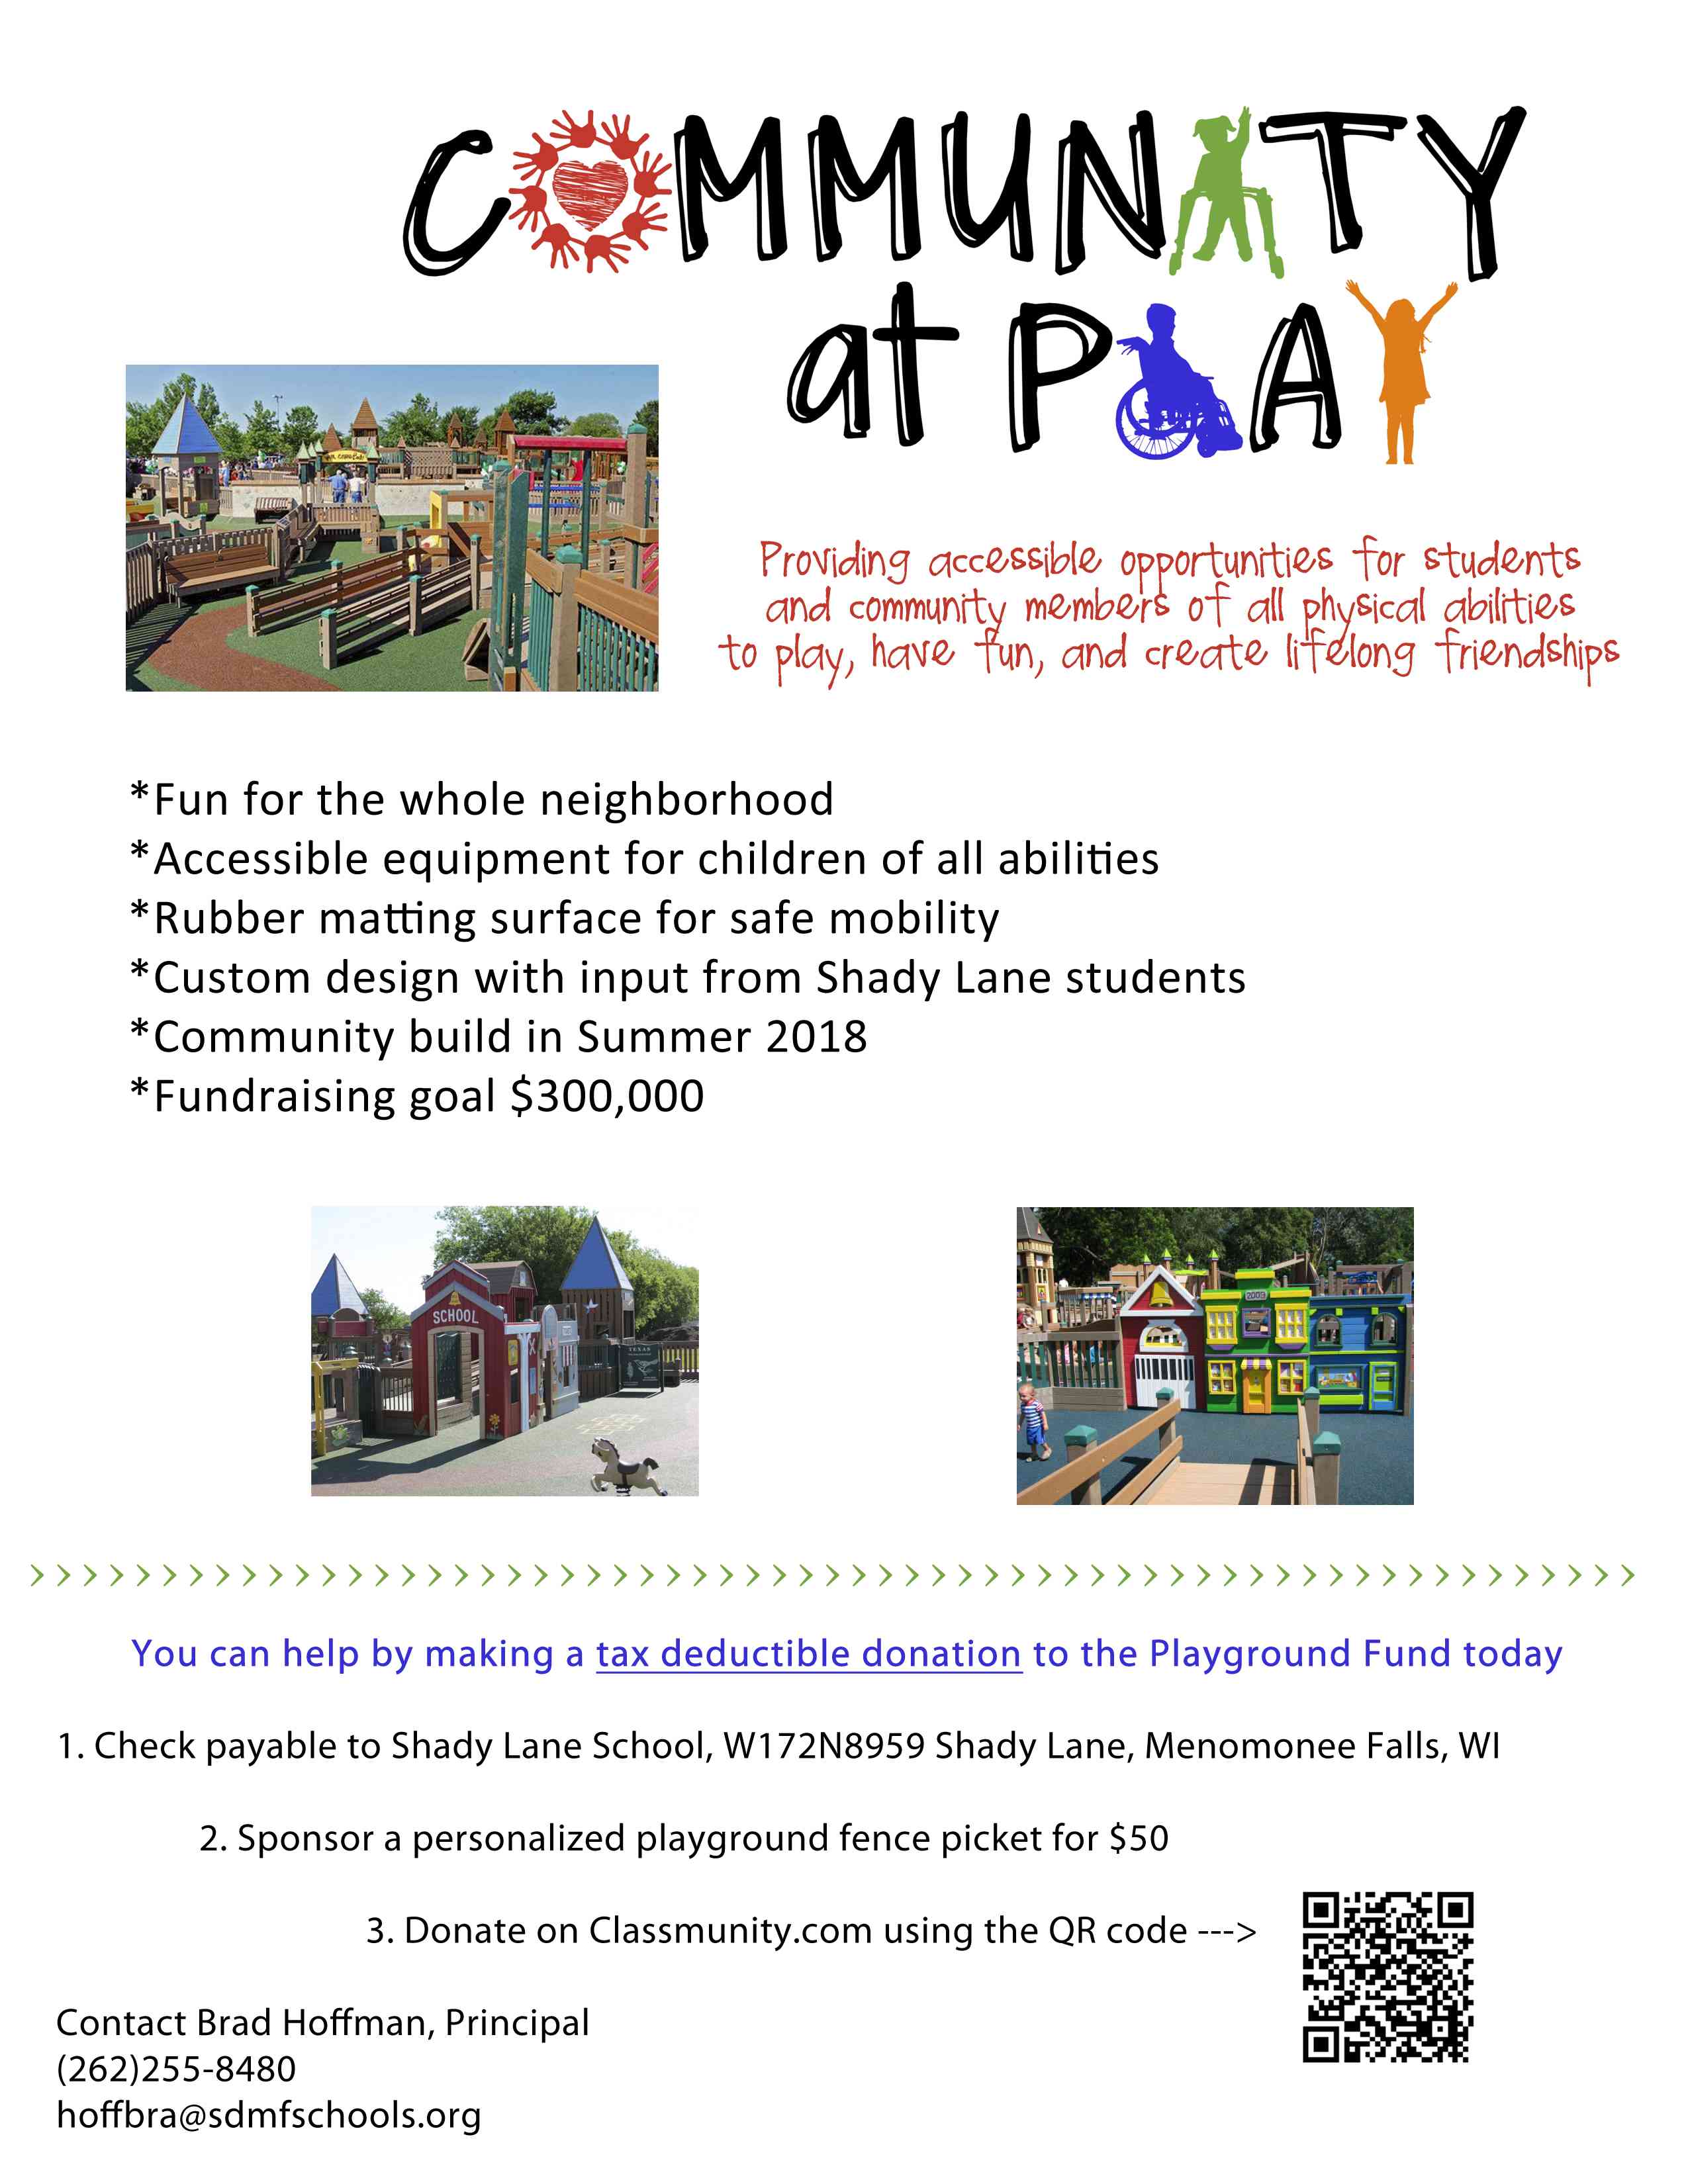 Shady Lane School Community at Play Image